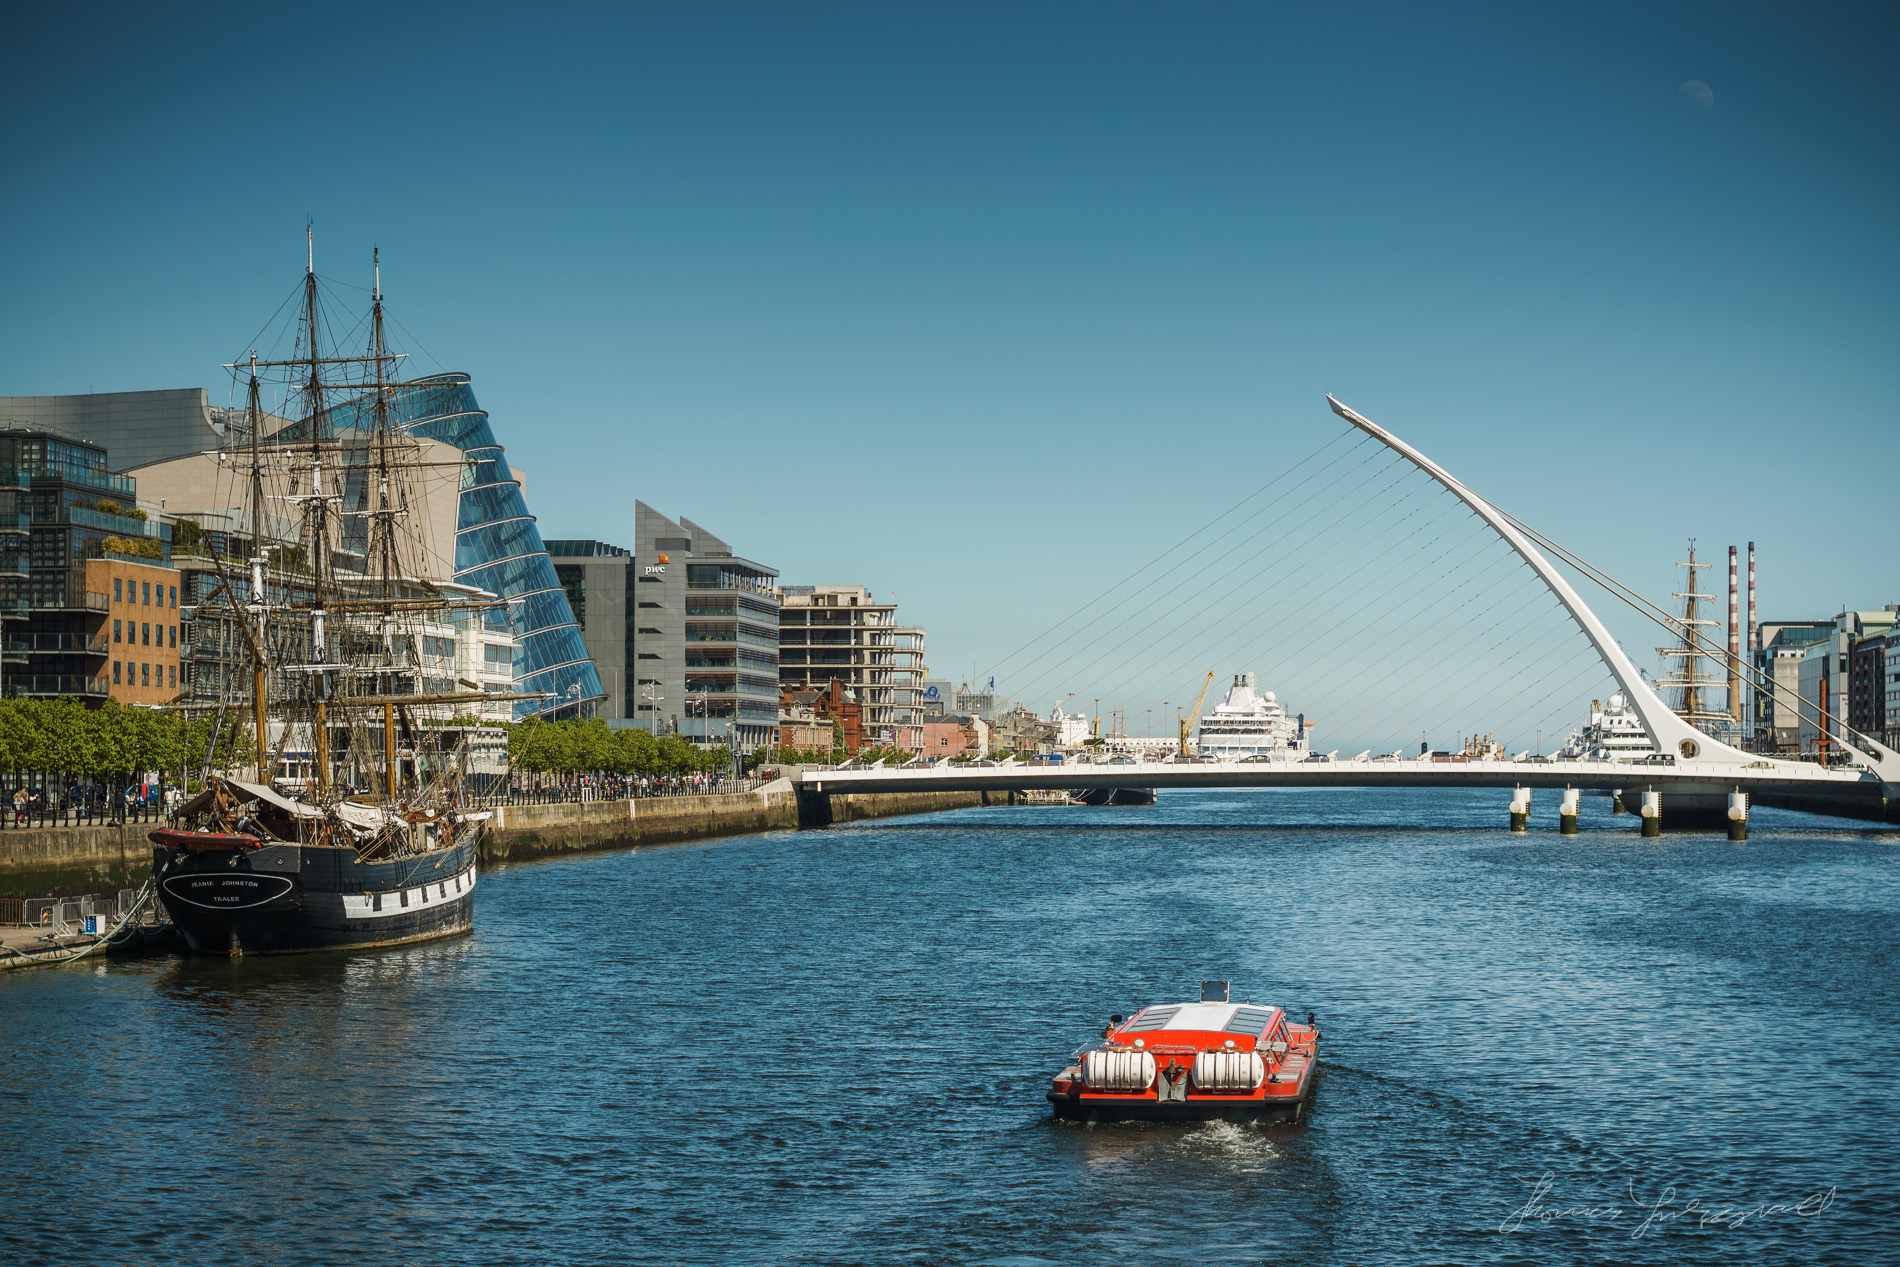 Modern Dublin and the River Liffey